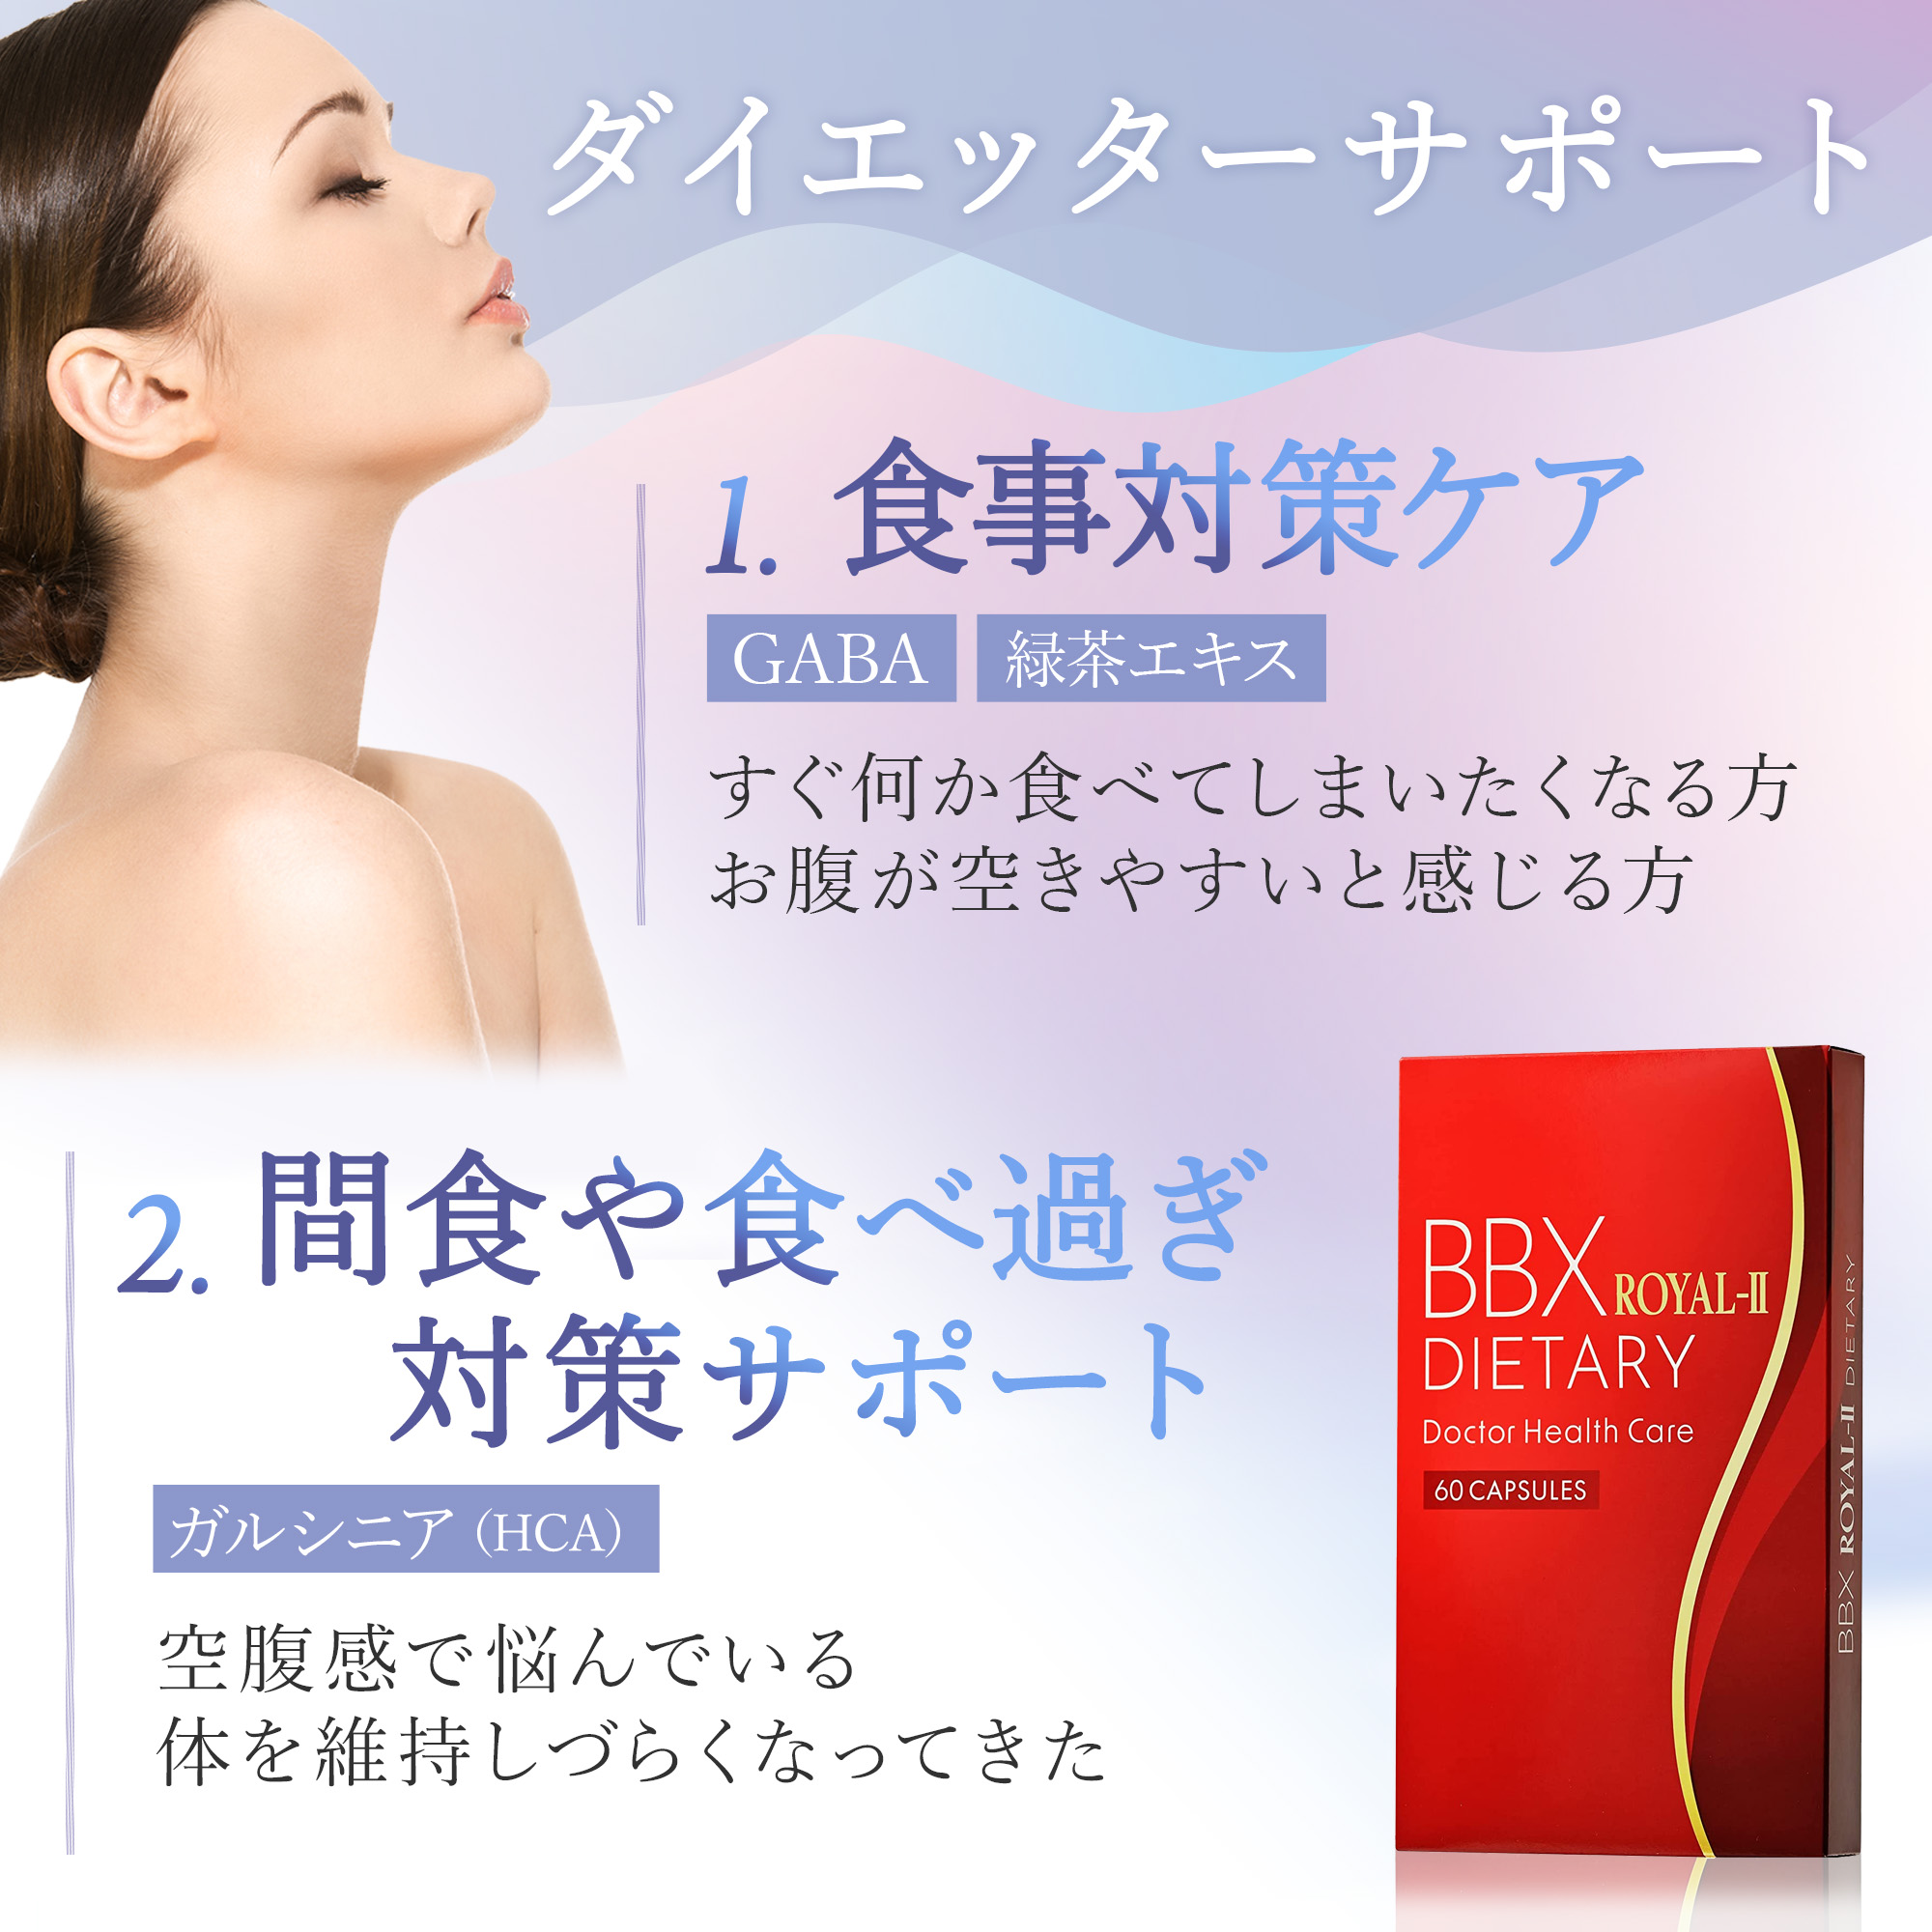 BBX ROYAL-Ⅱ | 日本ドクターヘルスケア